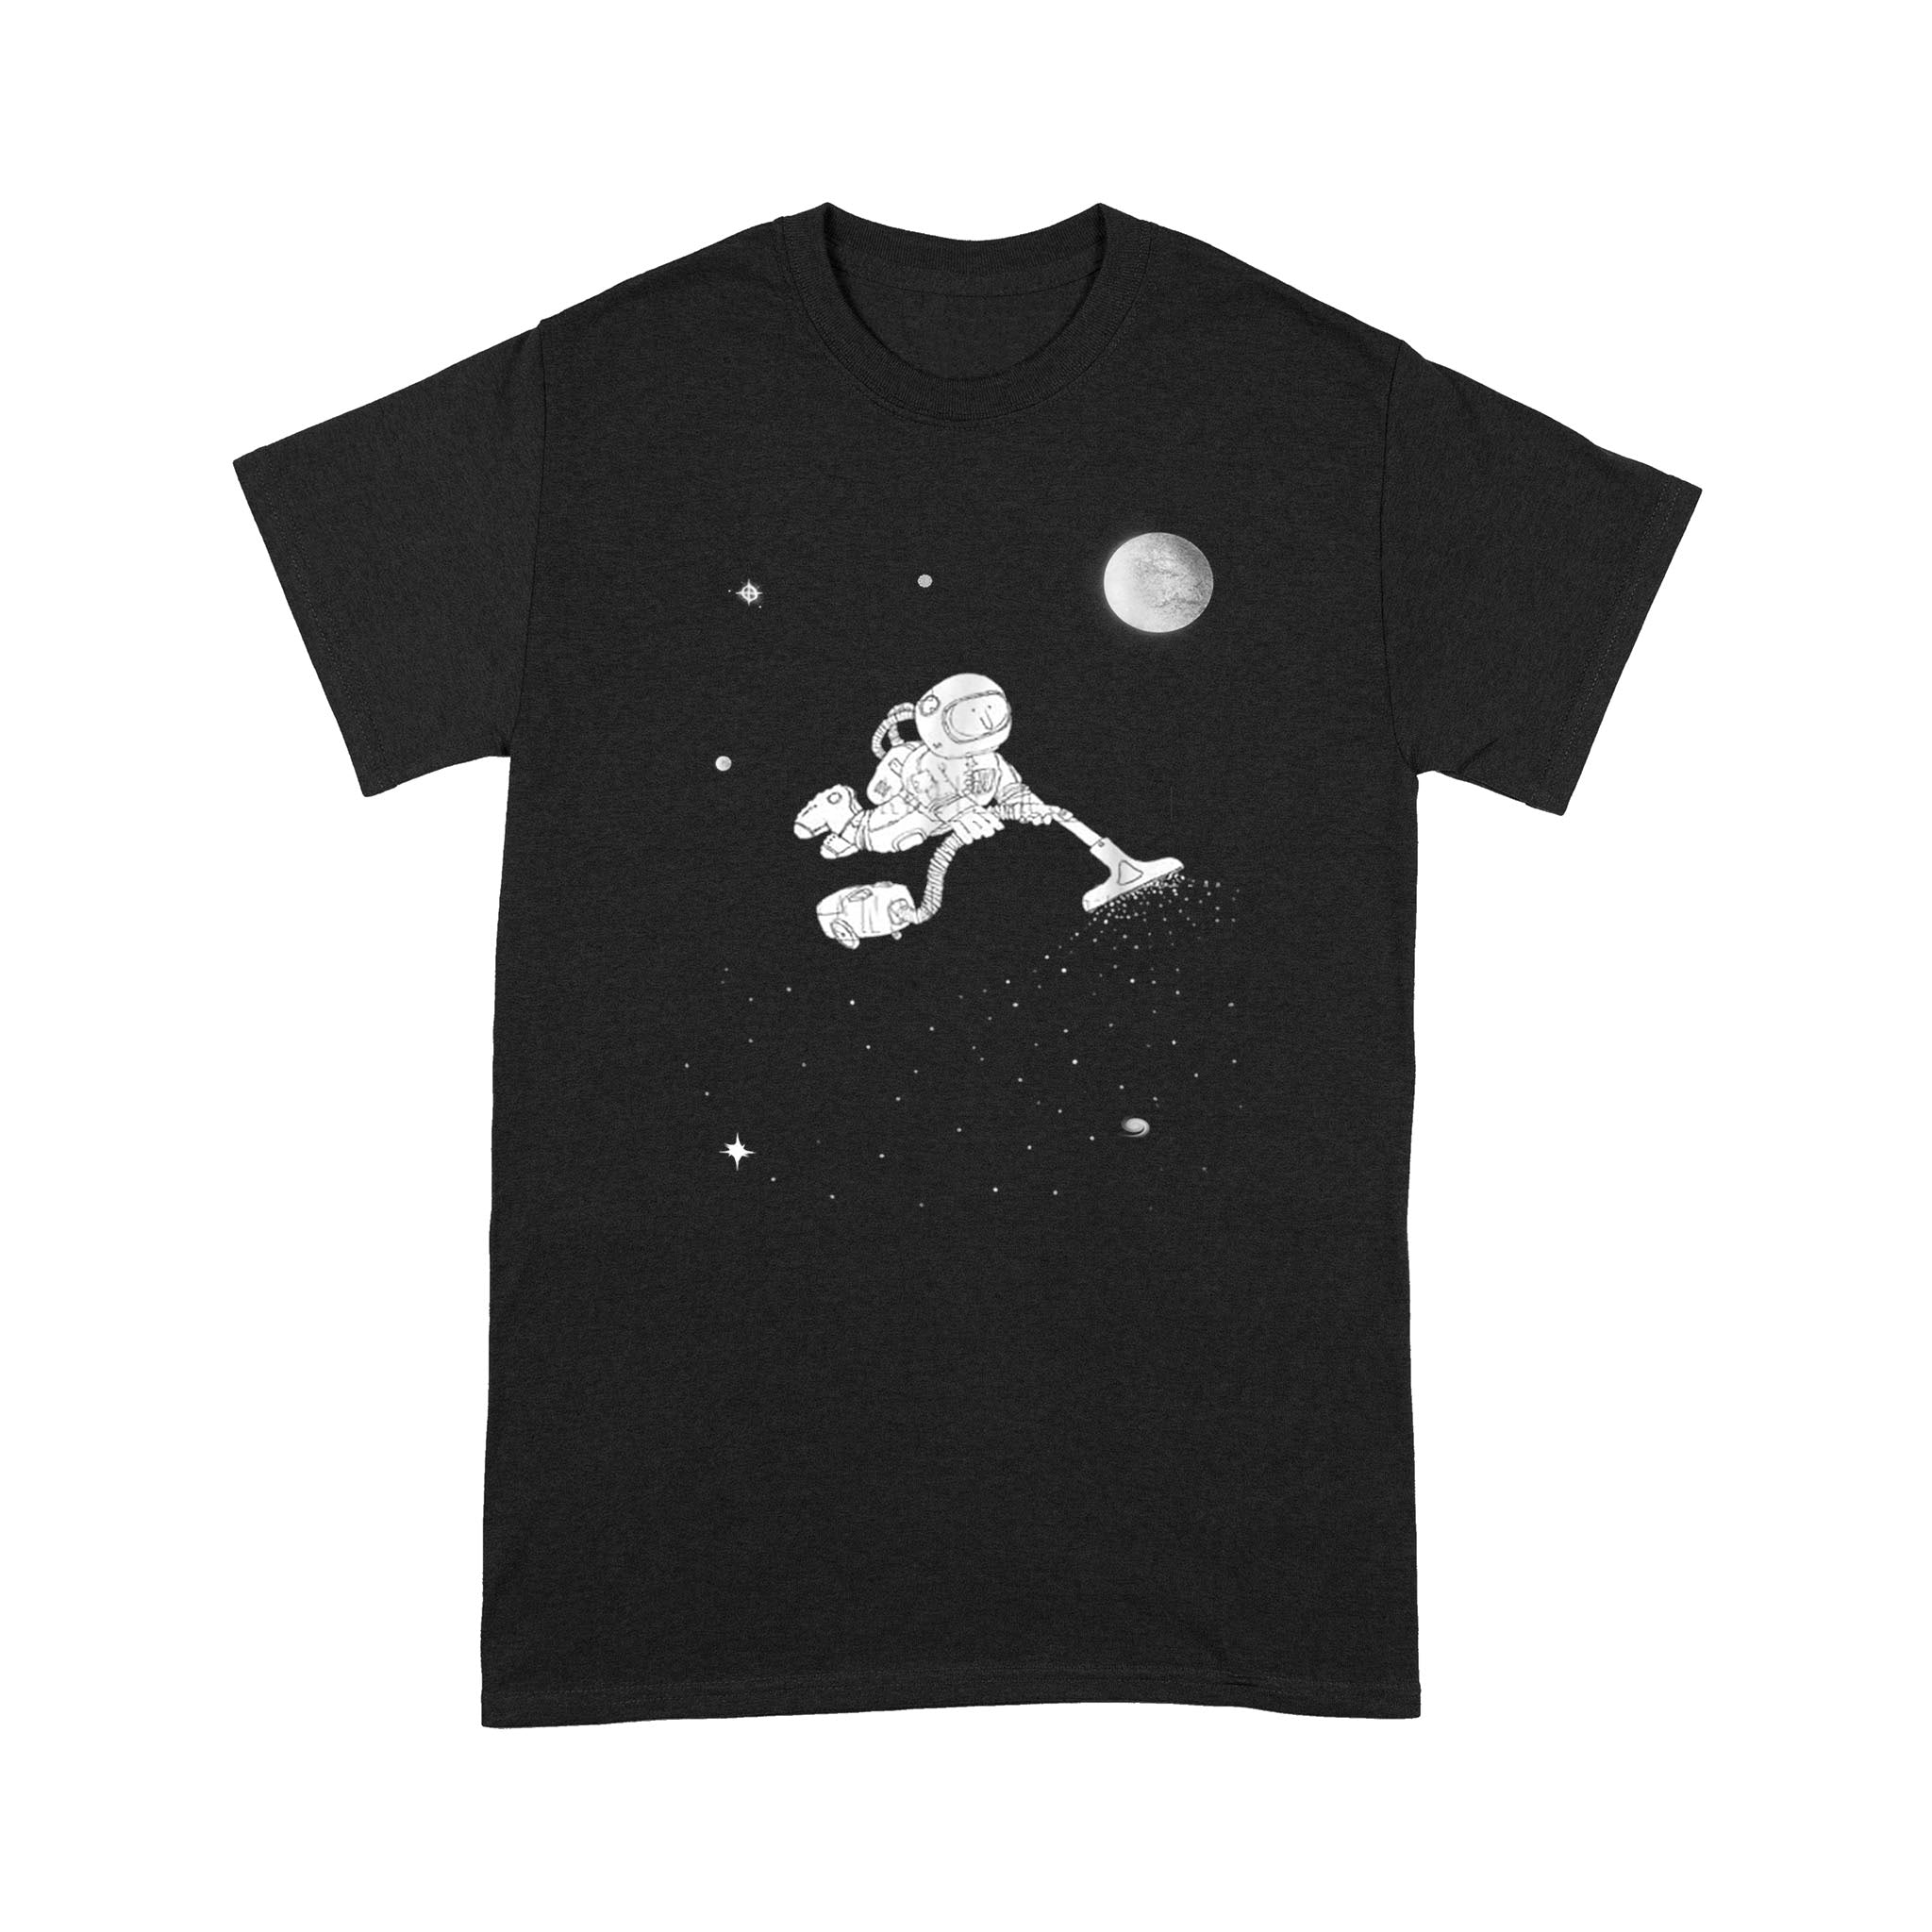 Vacuum of space - Standard T-shirt